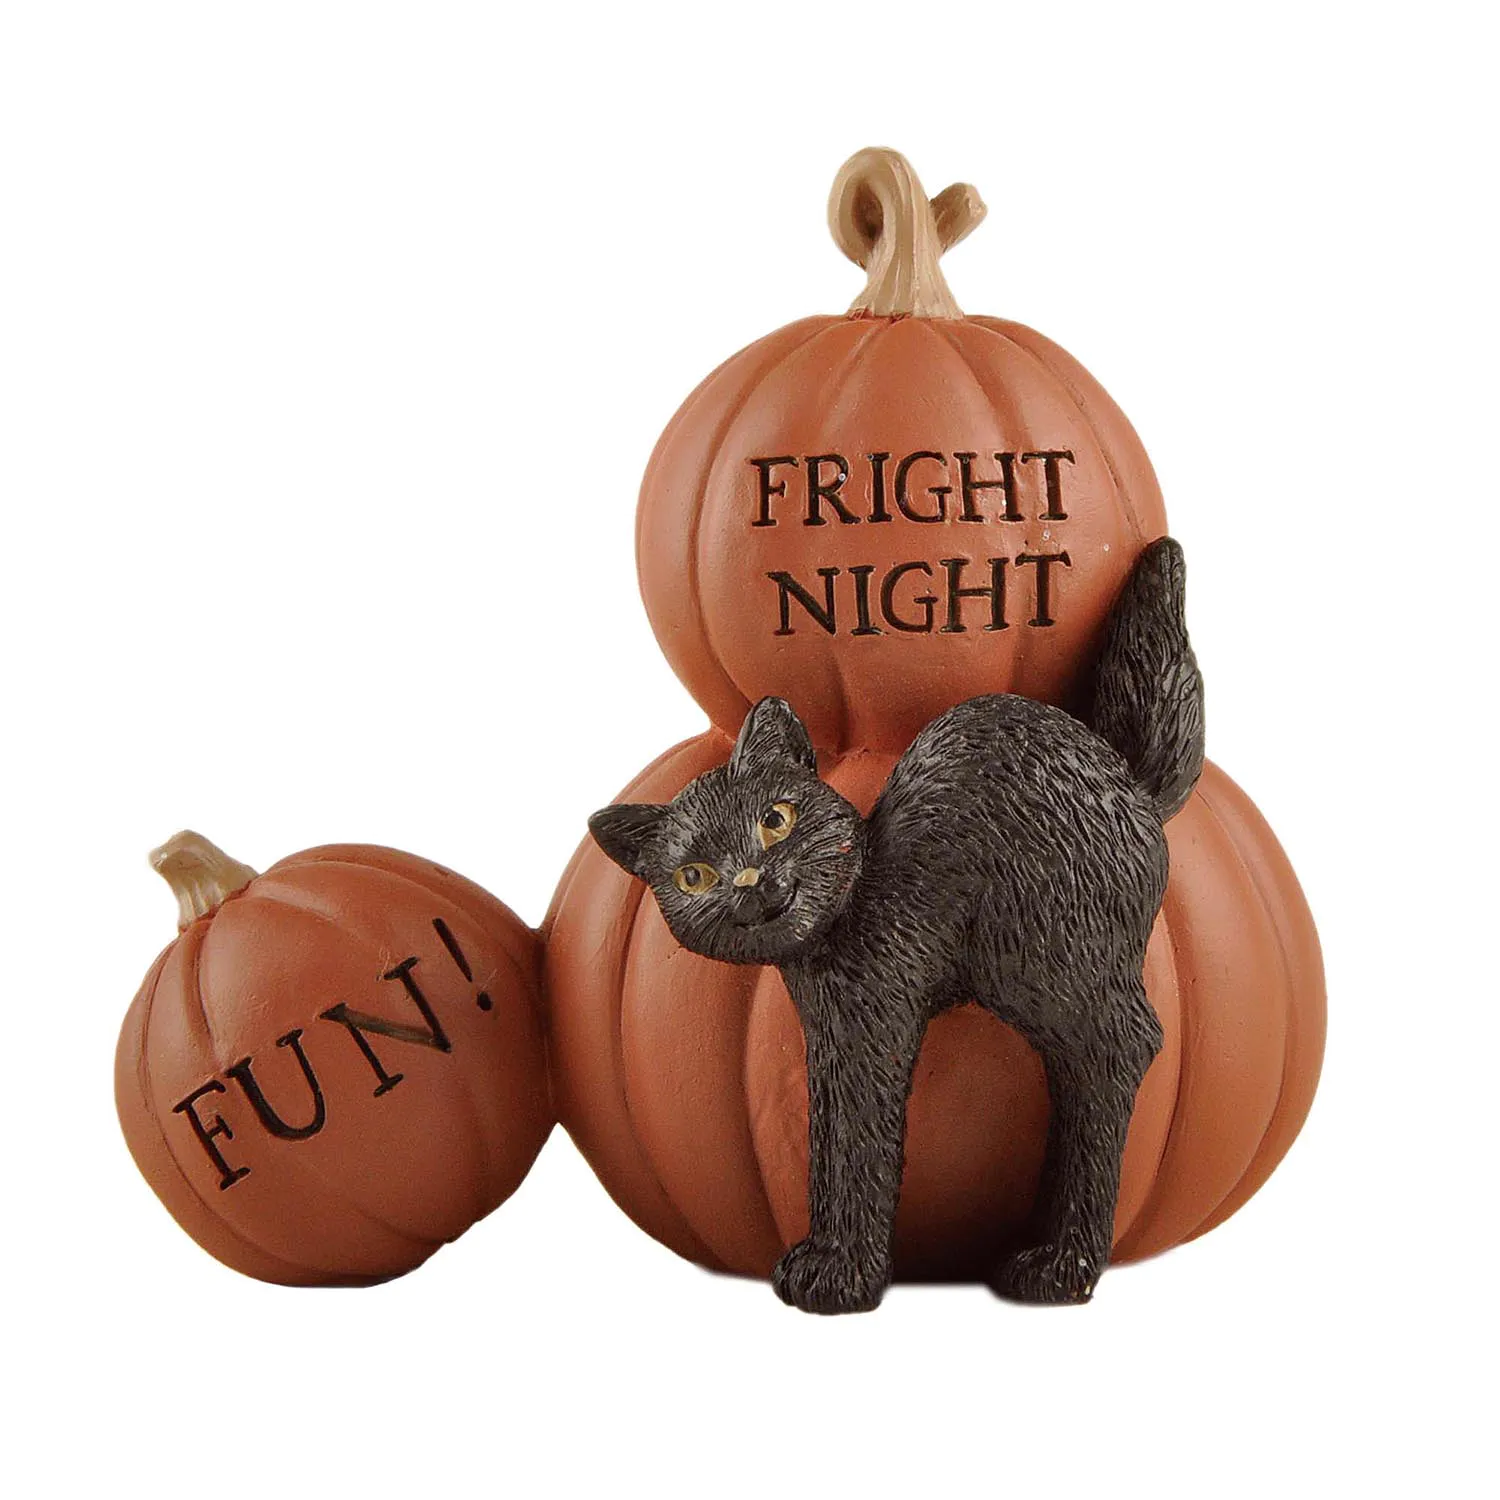 Spooky Delight - 'Fright Night Fun' Resin Pumpkin and Black Cat Halloween Home Decor236-13856